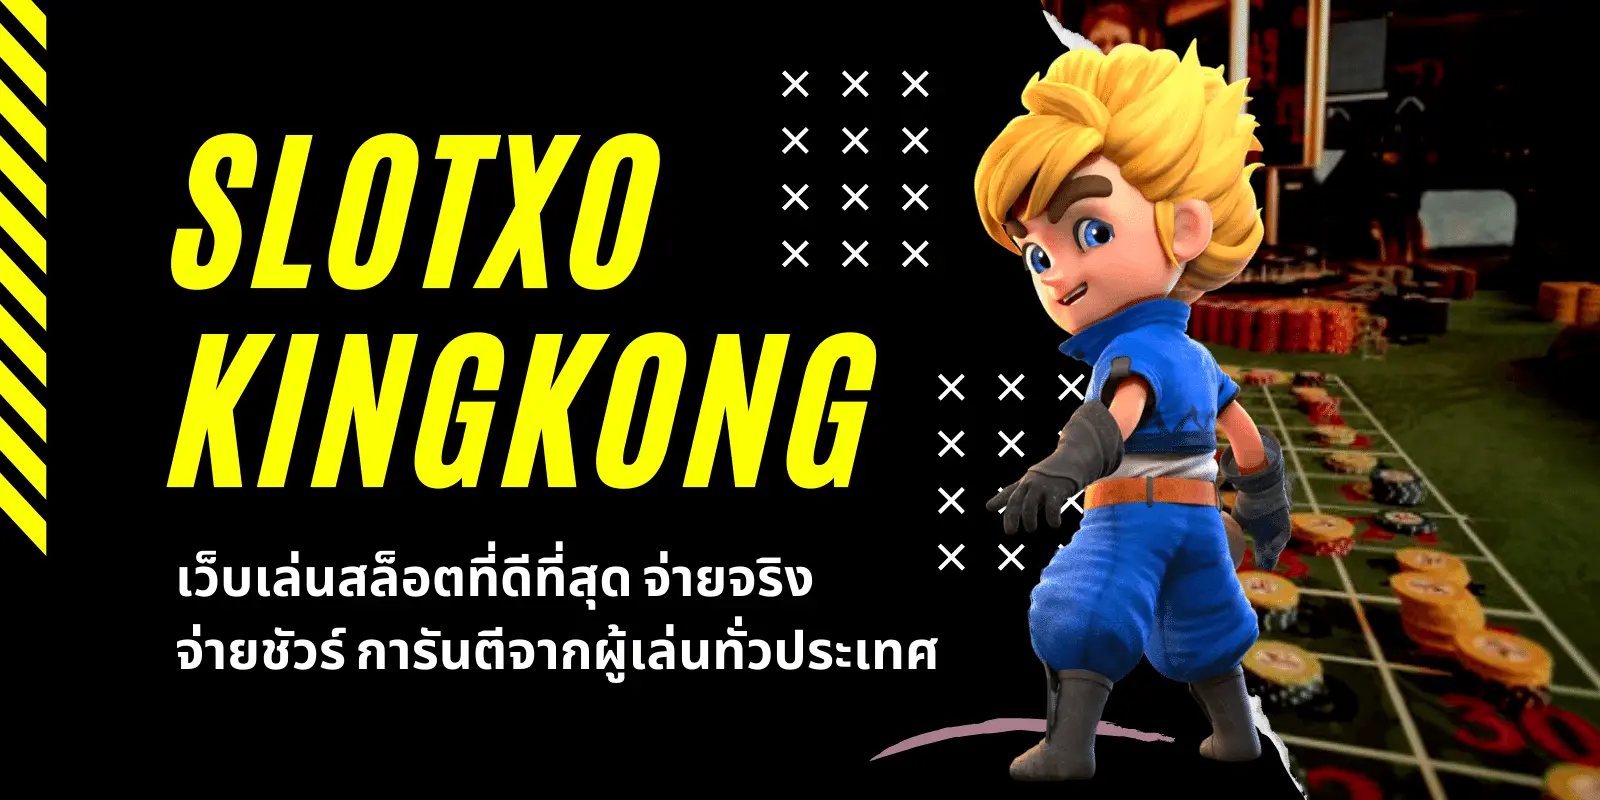 slotxo kingkong เว็บเล่นสล็อตที่ดีที่สุด  จ่ายจริง จ่ายชัวร์